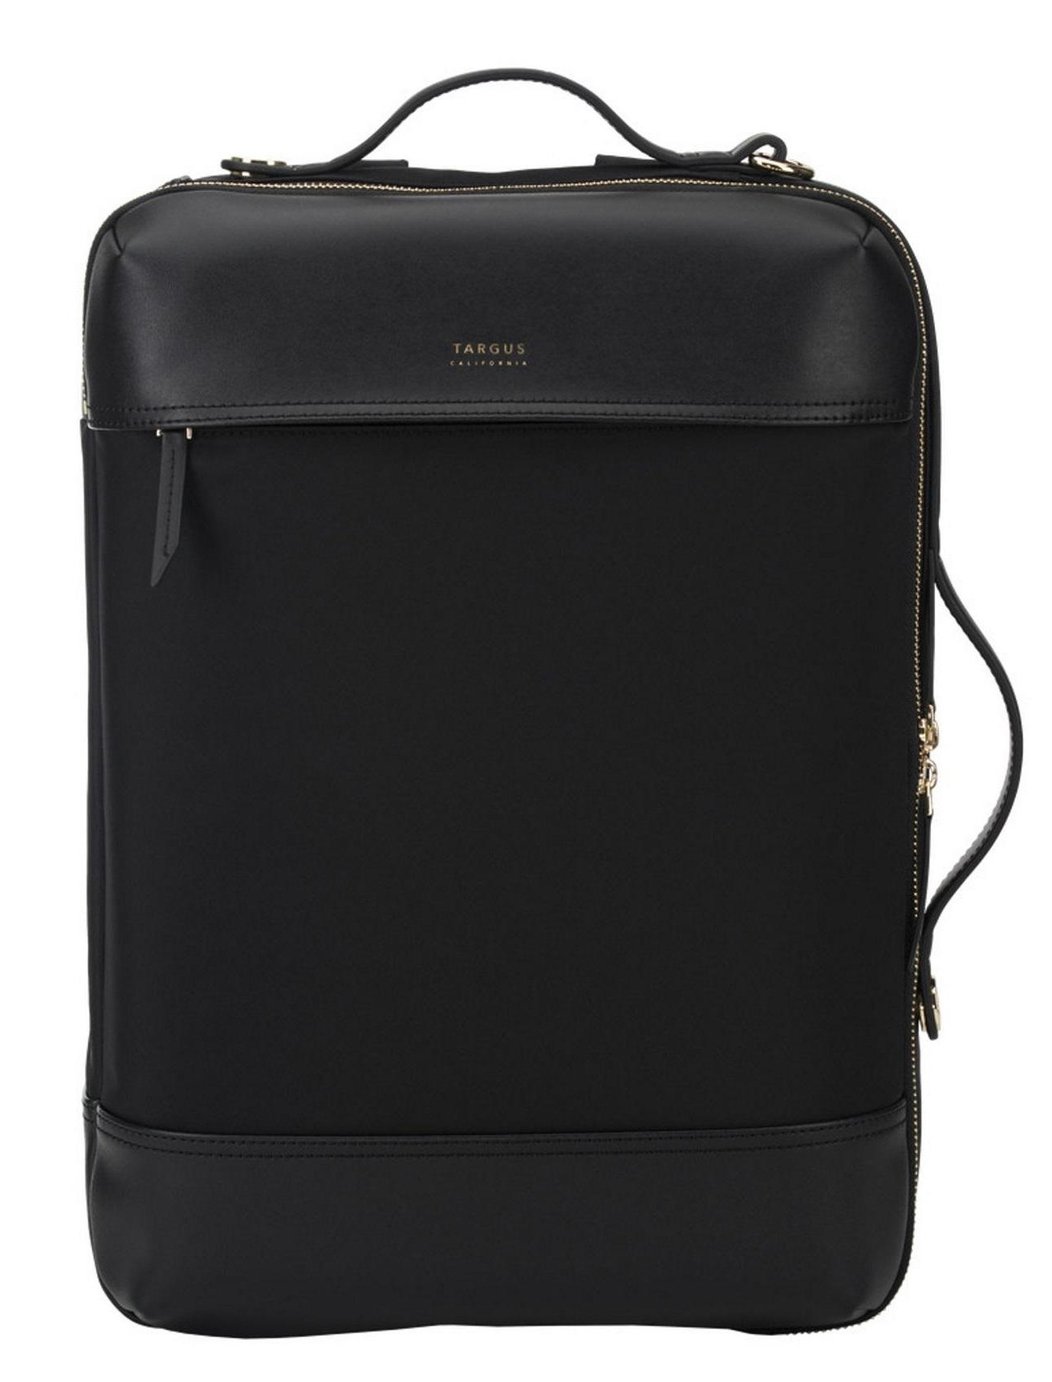 Targus Newport 15 Inch Laptop Backpack - Black